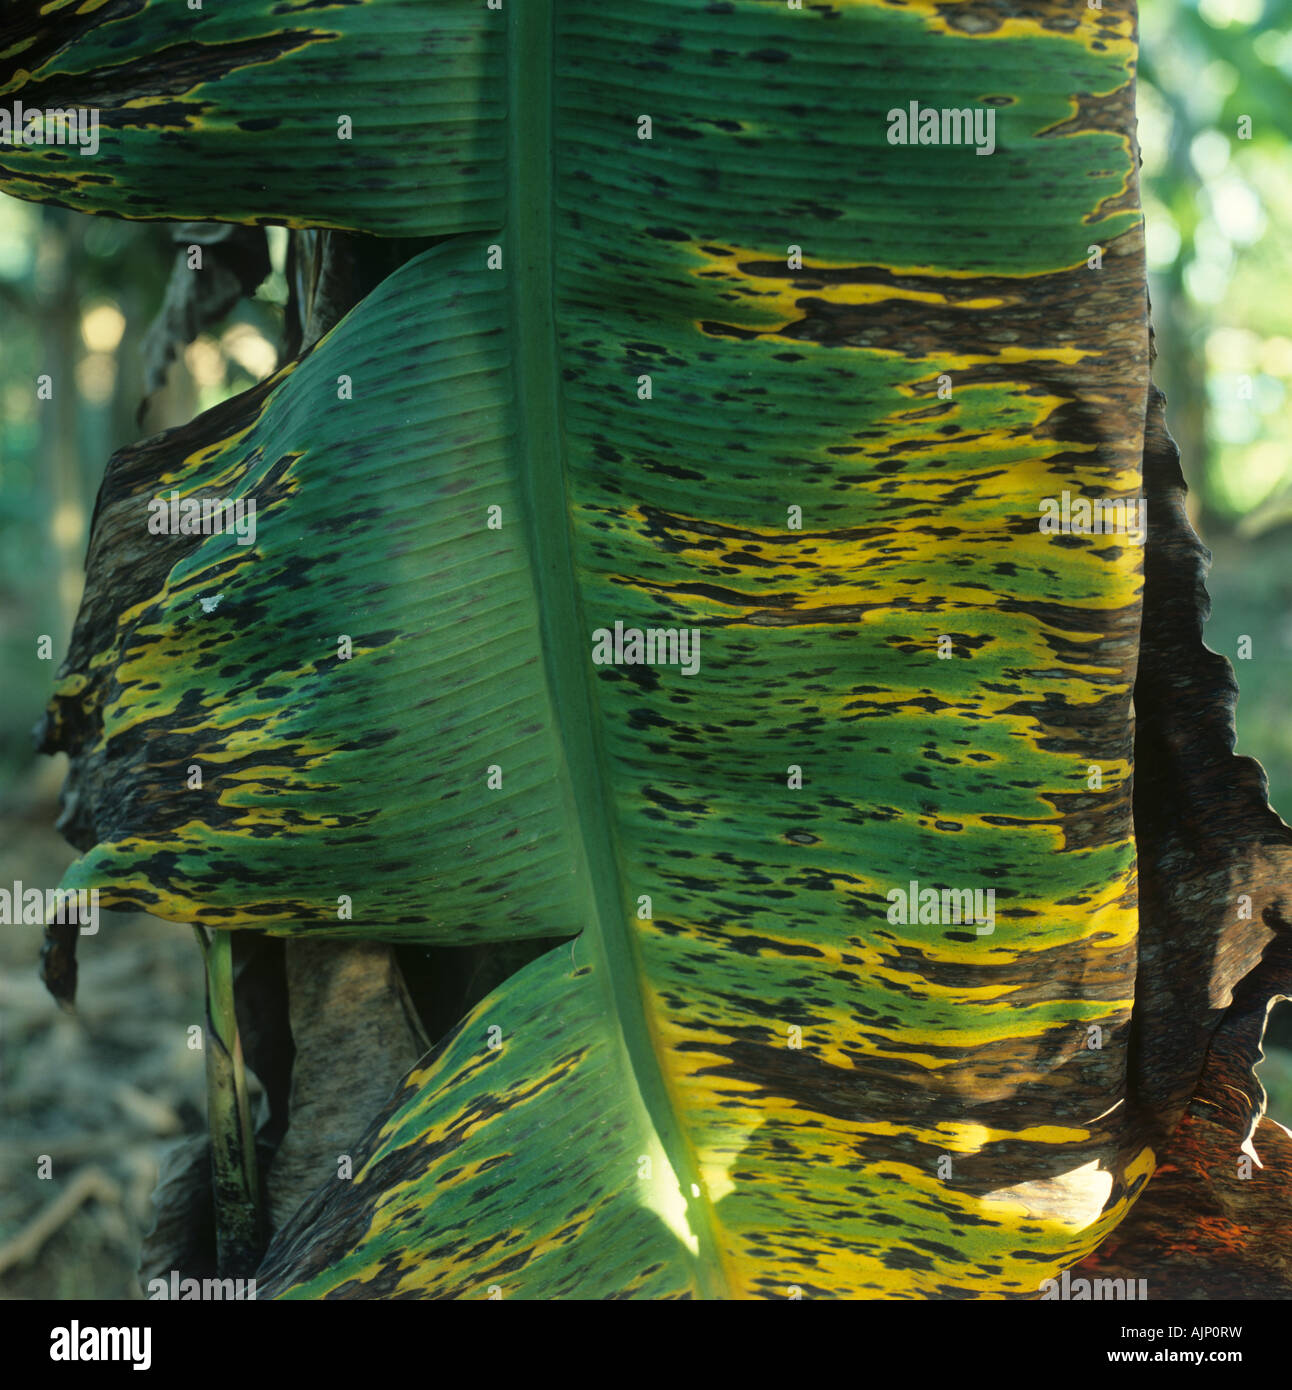 Banana leaf infected with black sigatoka disease Mycosphaerella fijiensis Stock Photo